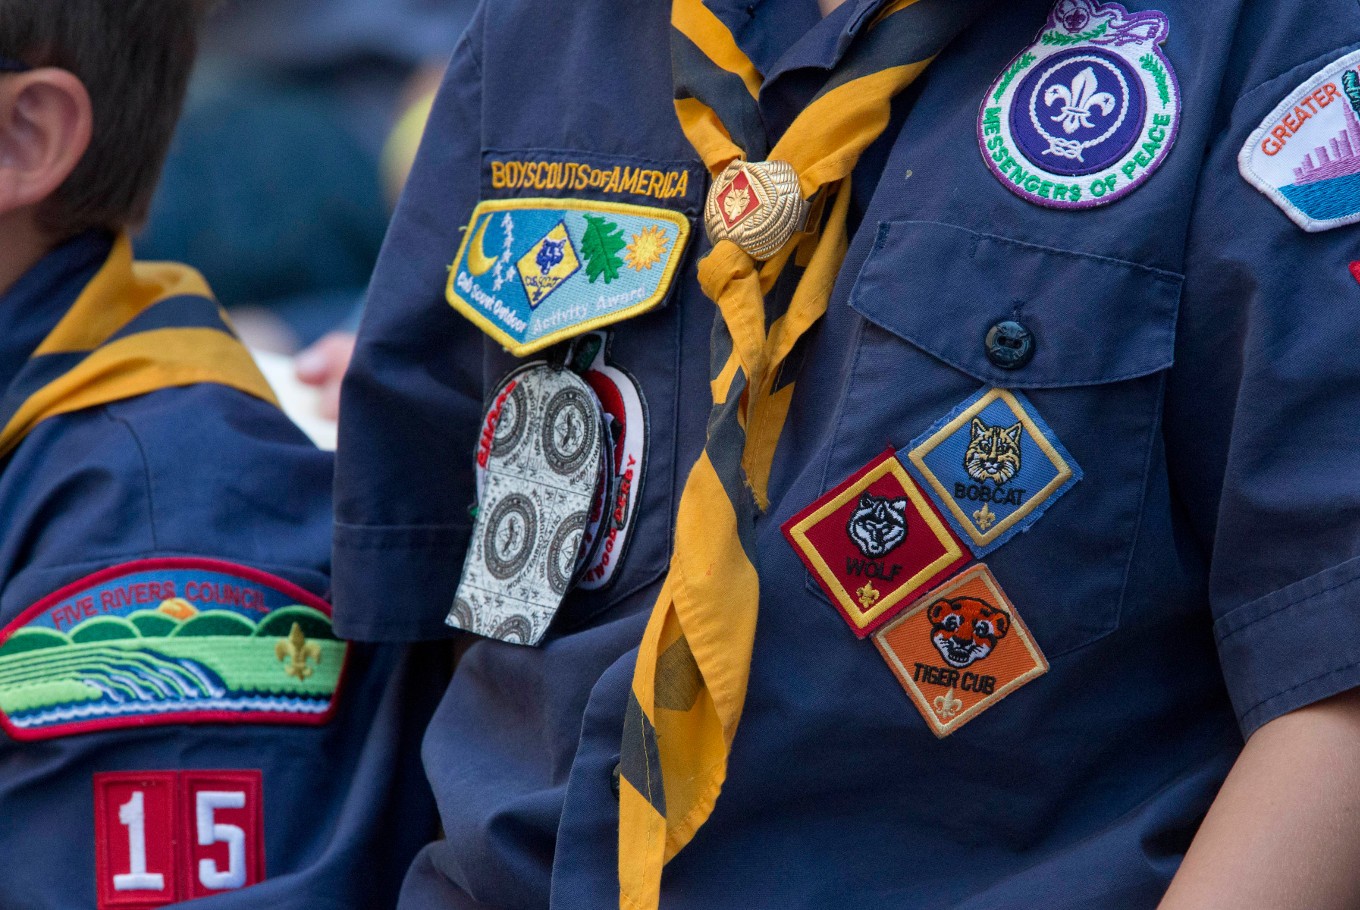 Boy Scouts will allow transgender children into programs 